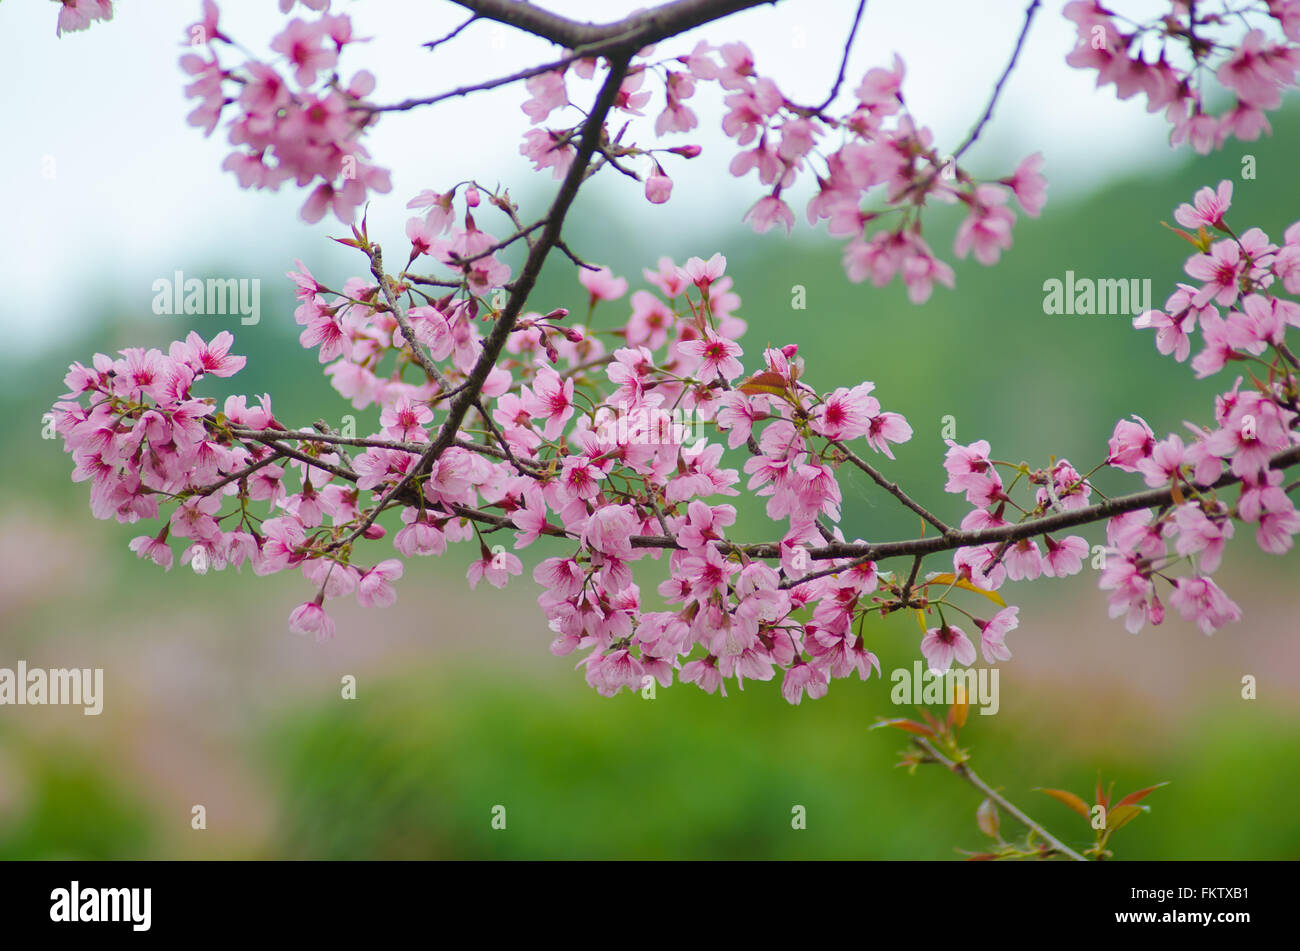 Wild Himalayan Cherry bloomimg on tree at Phu lom lo mountain, Loei provice, Thailand Stock Photo